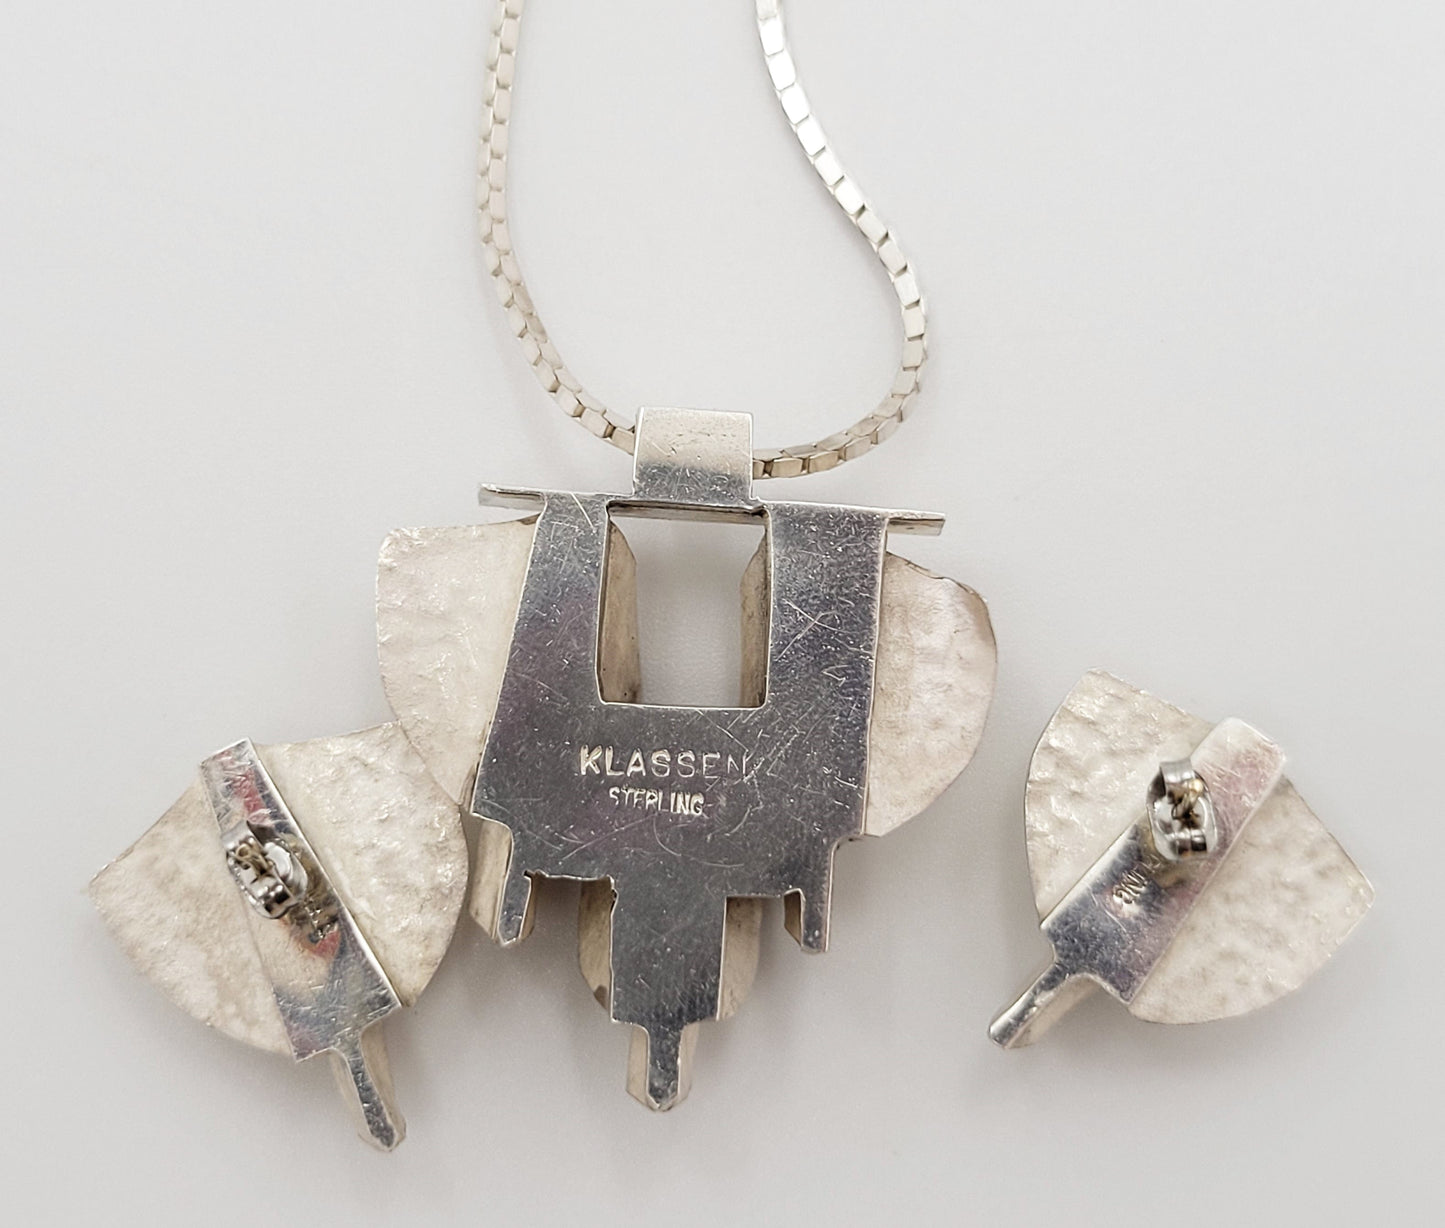 Klassen Jewelry Brianna Glanzer Klassen Sterling Silver Abstract Modernist Necklace & Earring Set 1990s